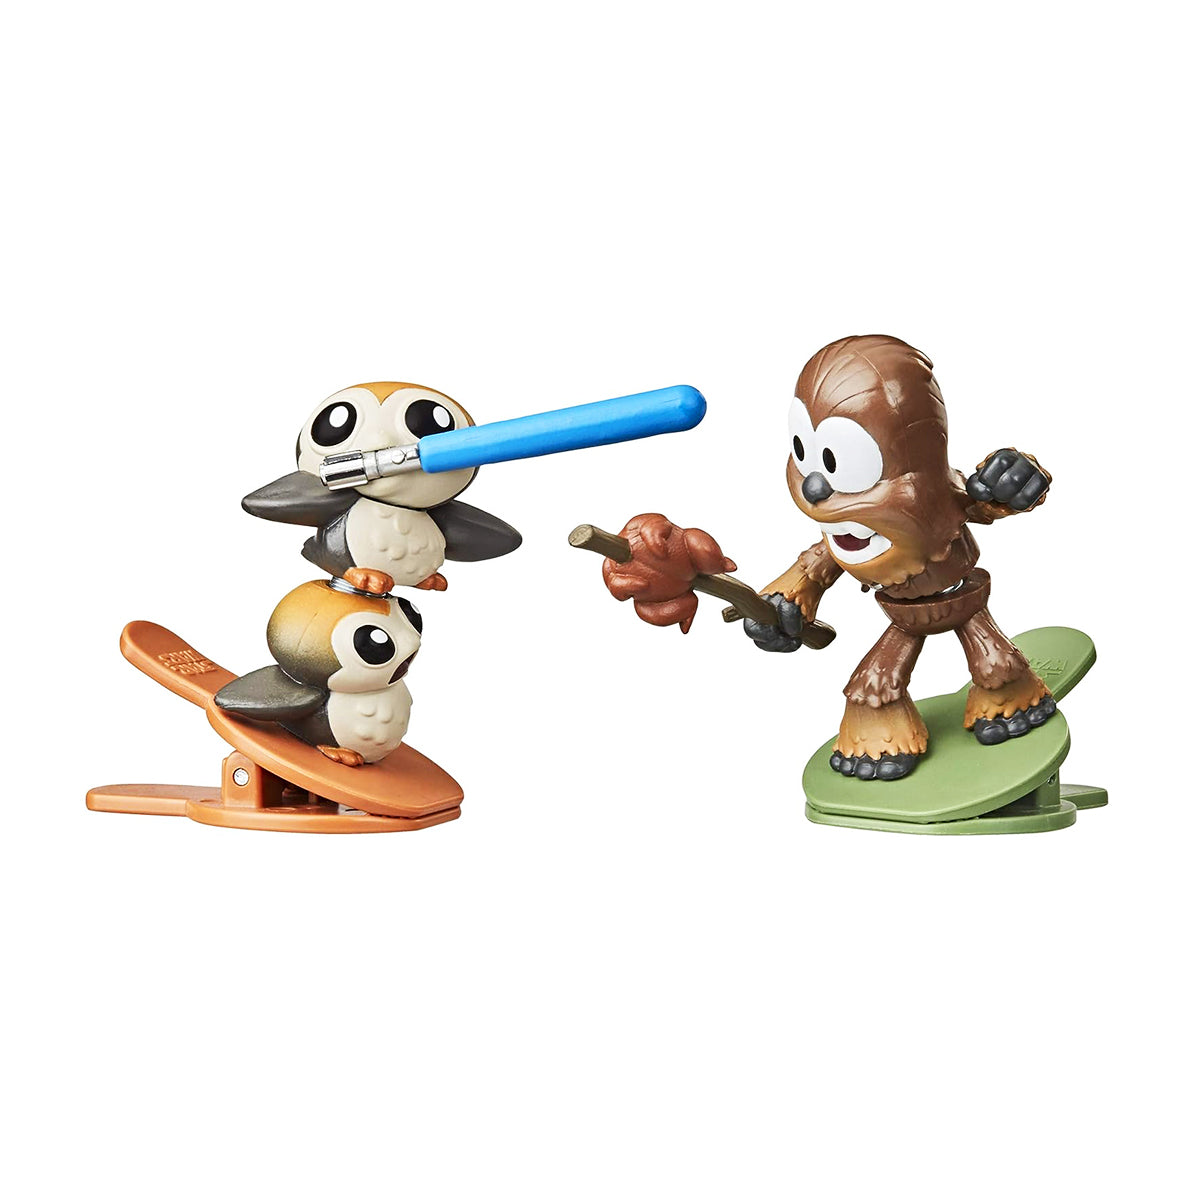 Star Wars - Battle Bobblers Porgs Vs Chewie Battling Action Figure Pack